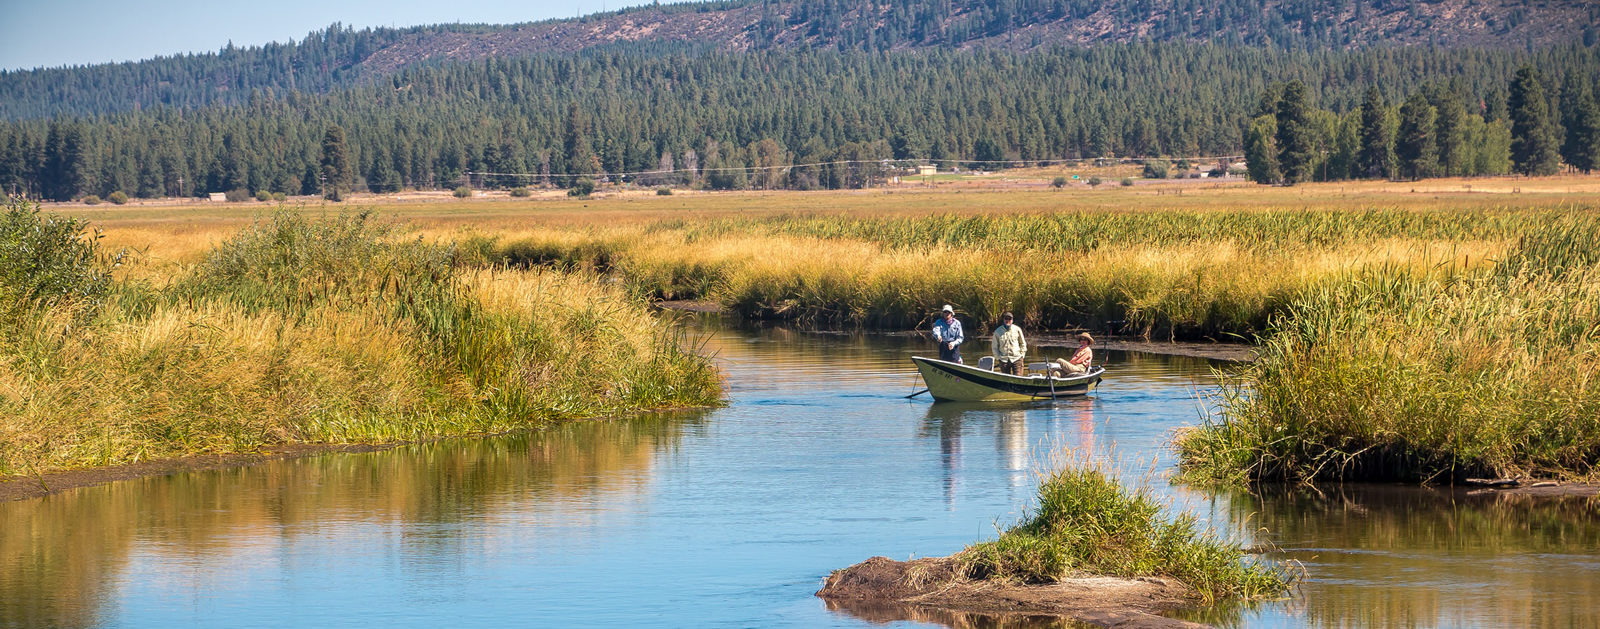 Fishing in the Wood River Wetland, 30 miles north of Klamath Falls, Oregon. | Greg Shine, BLM